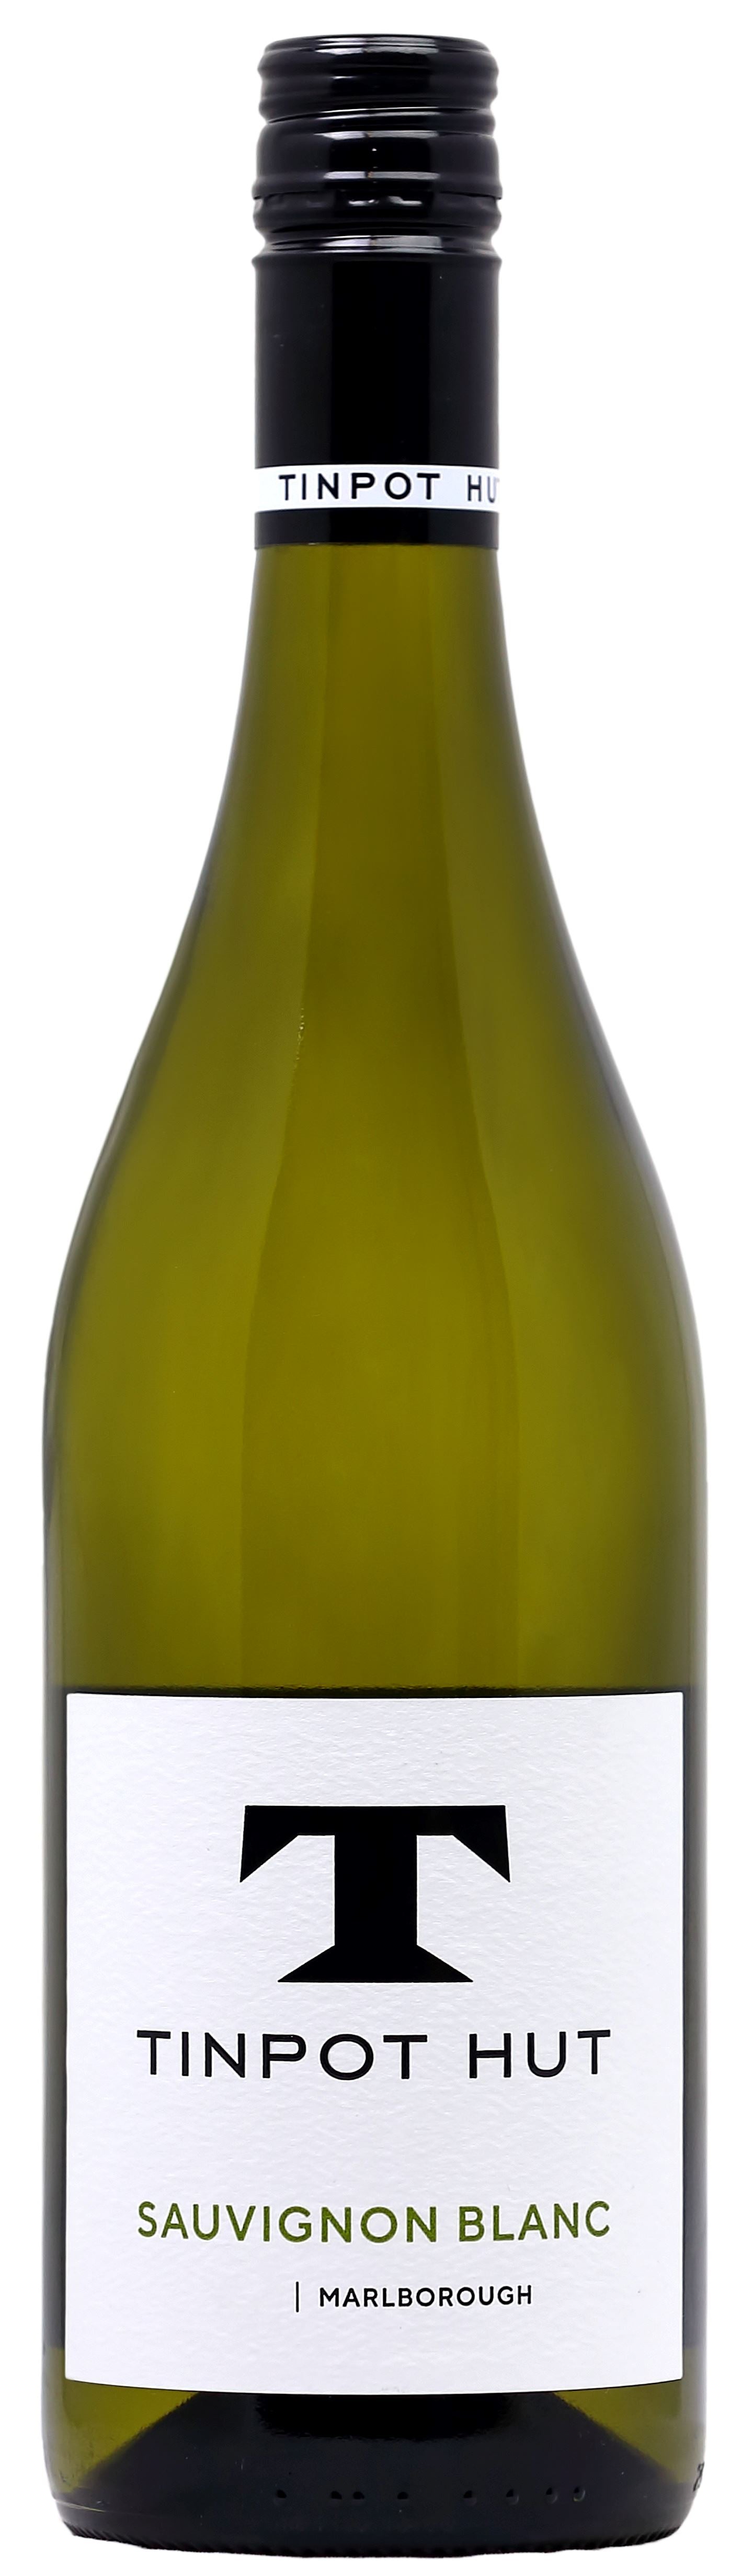 Tinpot Hut, Marlborough Sauvignon Blanc, New Zealand Wine Bottle Liberty Wines 